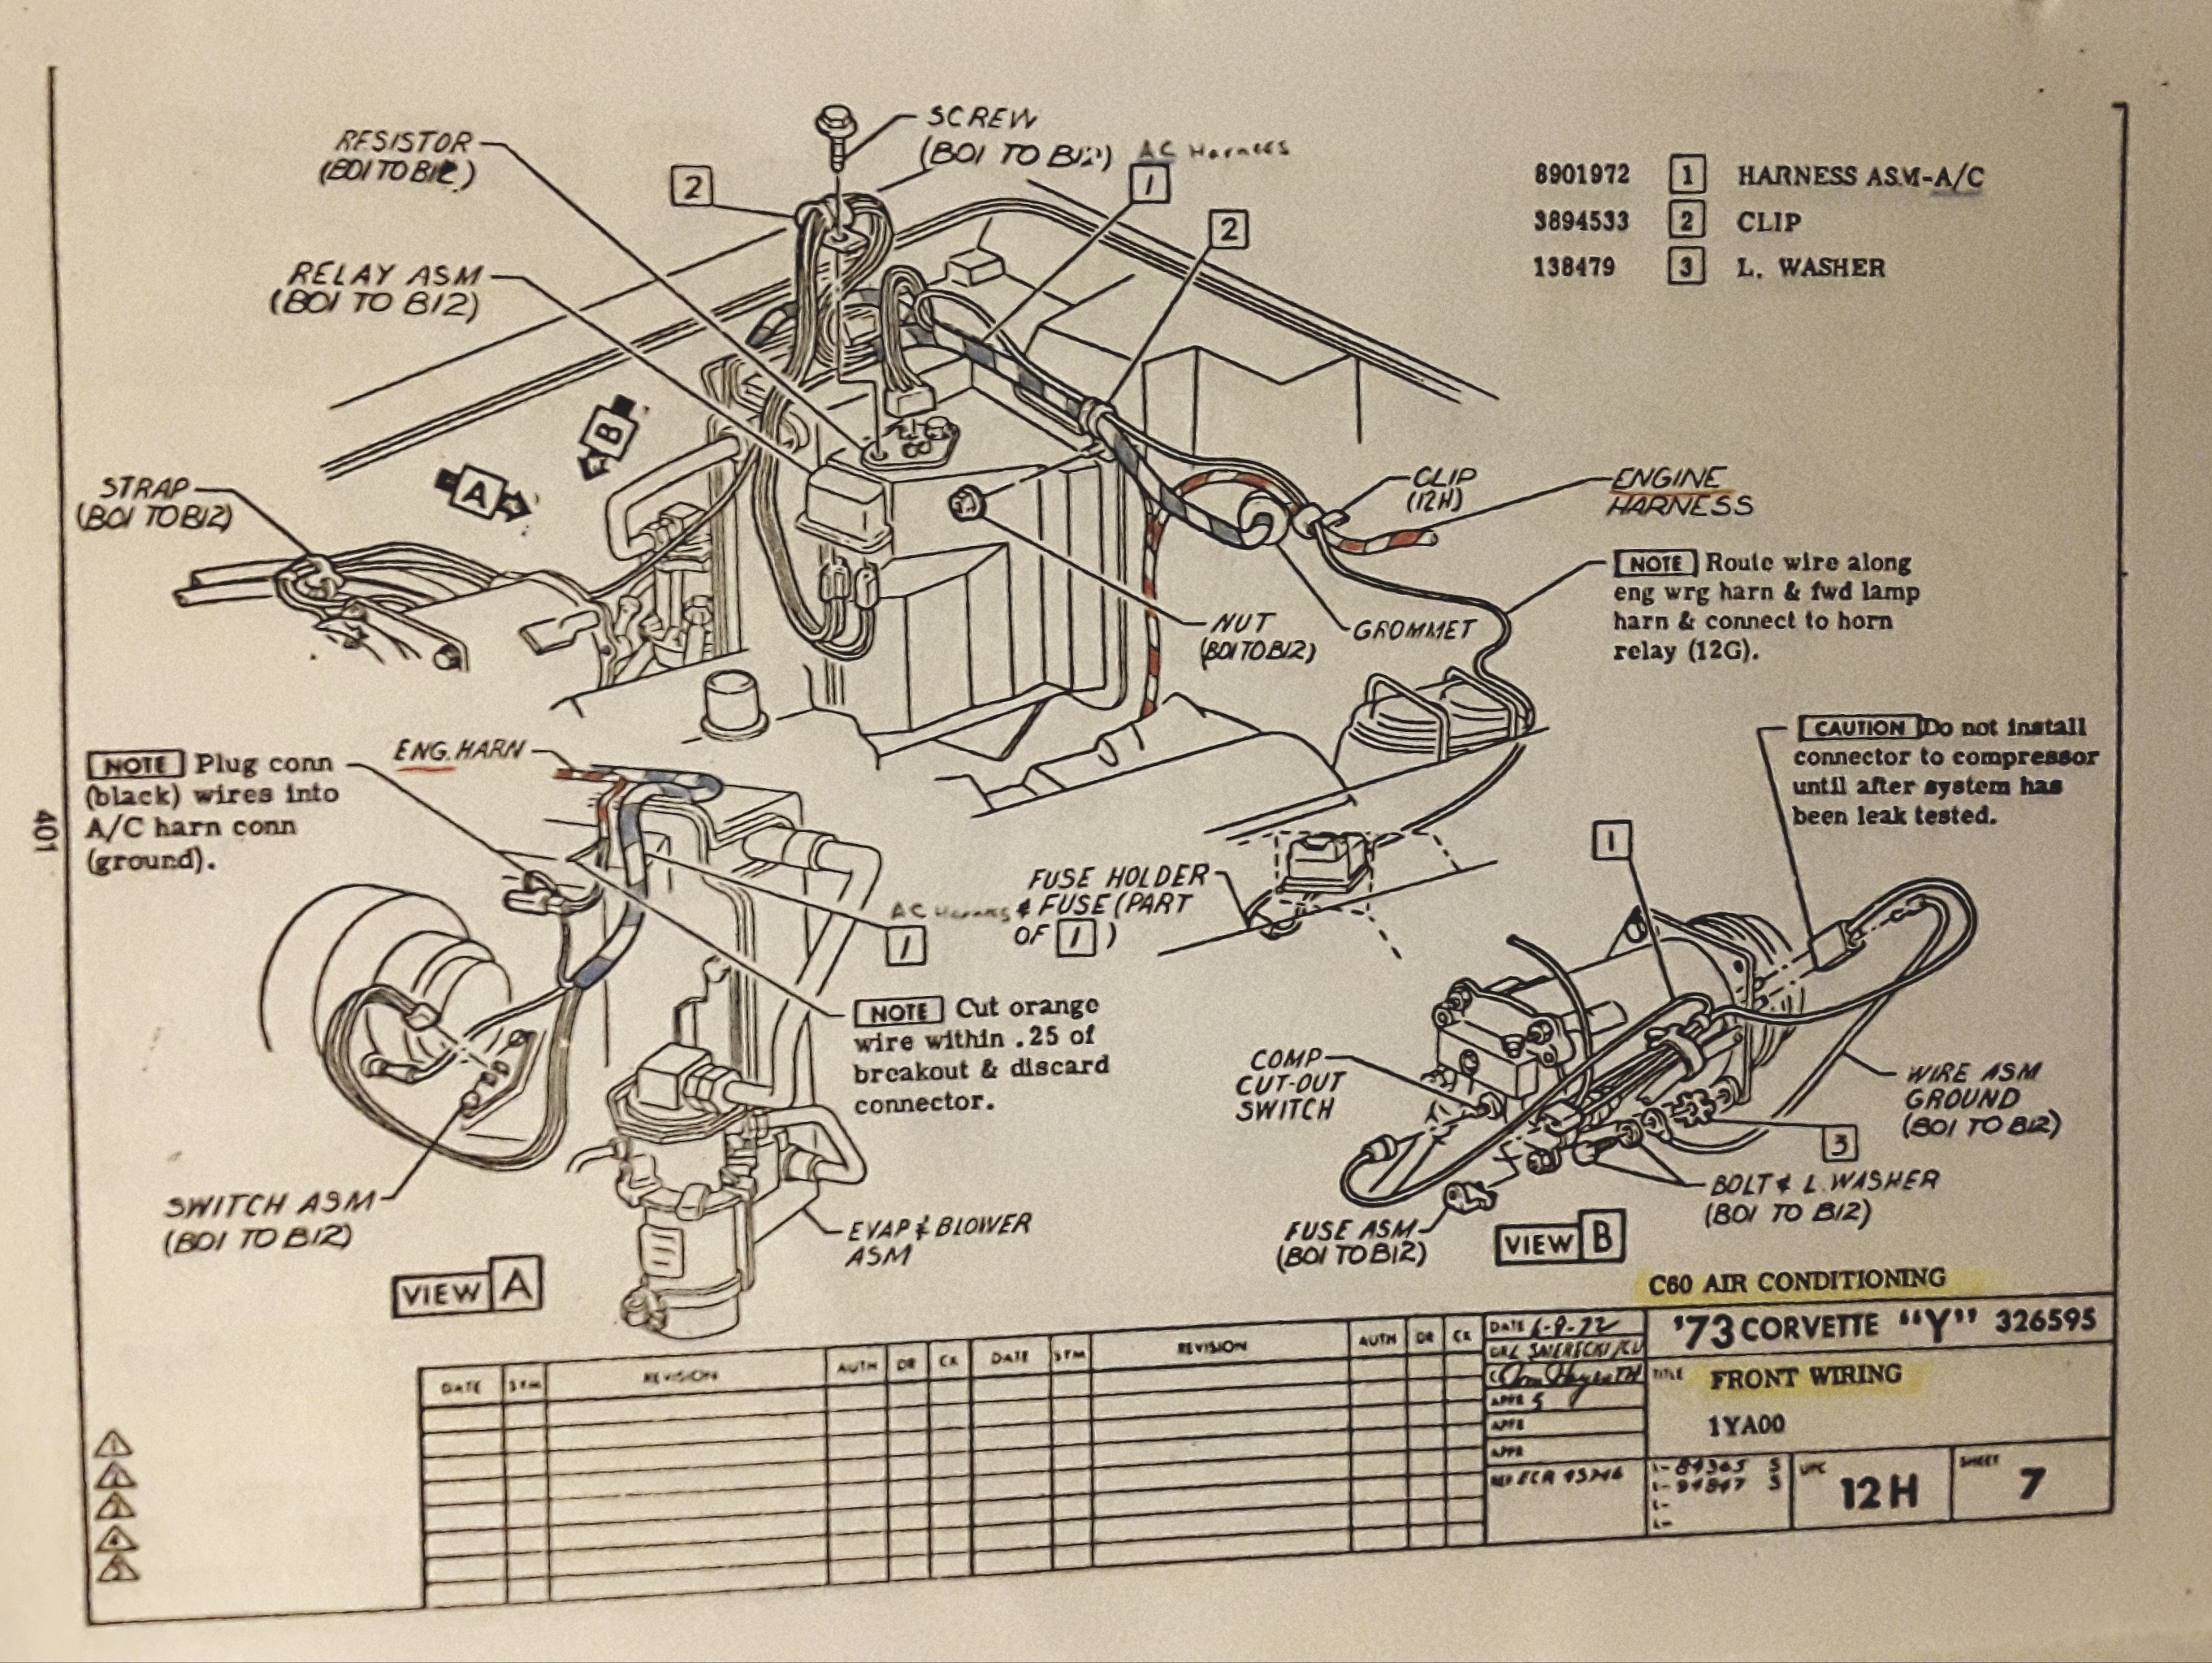 Wiring Diagram Corvette 1973 - Wiring Diagram